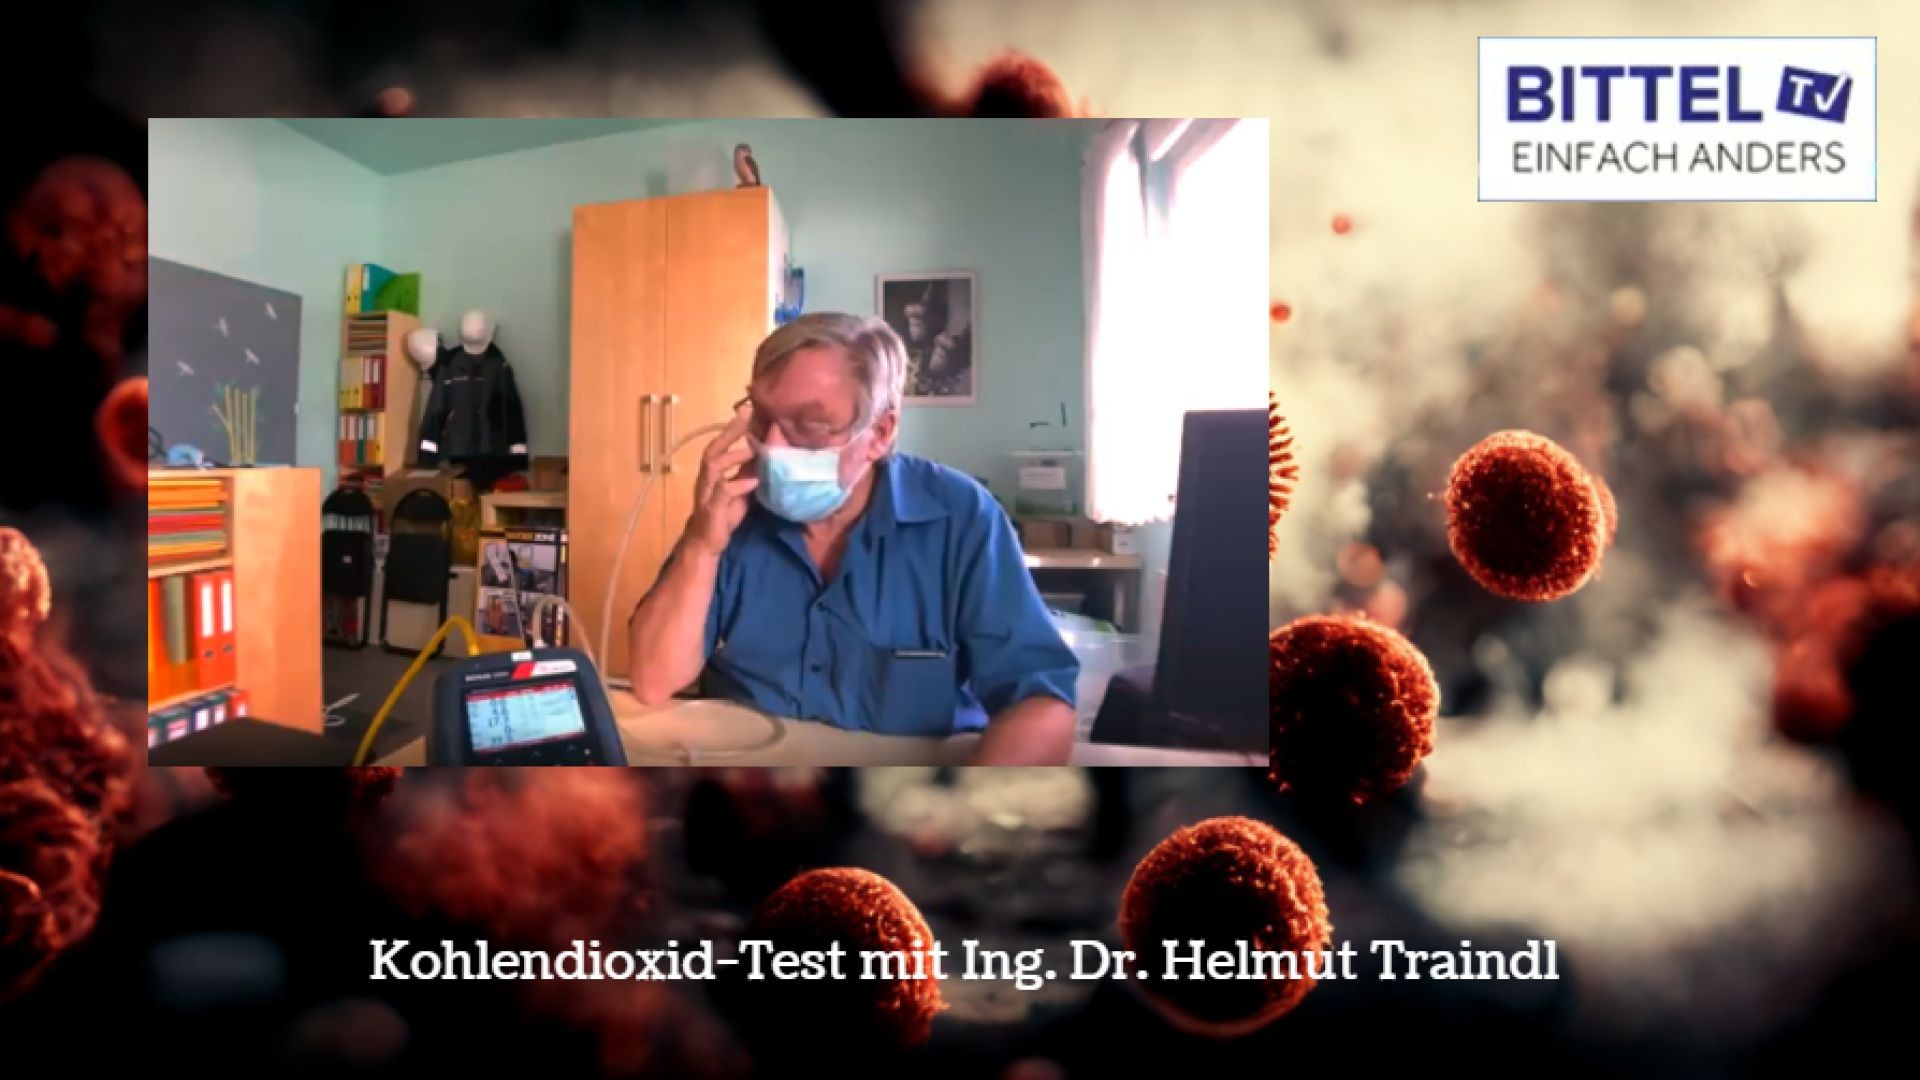 Kohlendioxid-Test mit Ing. Dr. Helmut Traindl 08.09.20